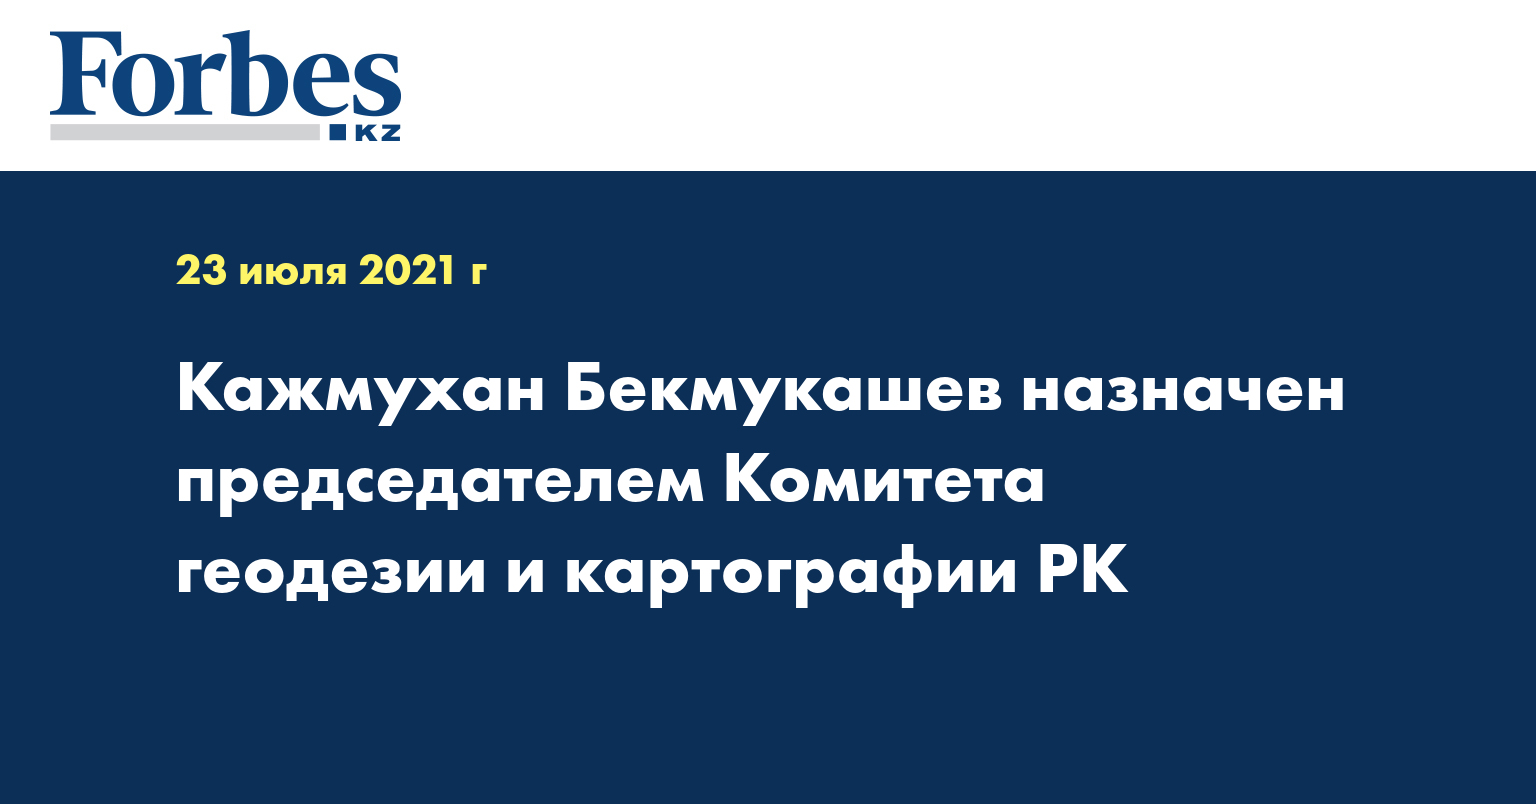 Кажмухан Бекмукашев назначен председателем Комитета геодезии и картографии РК